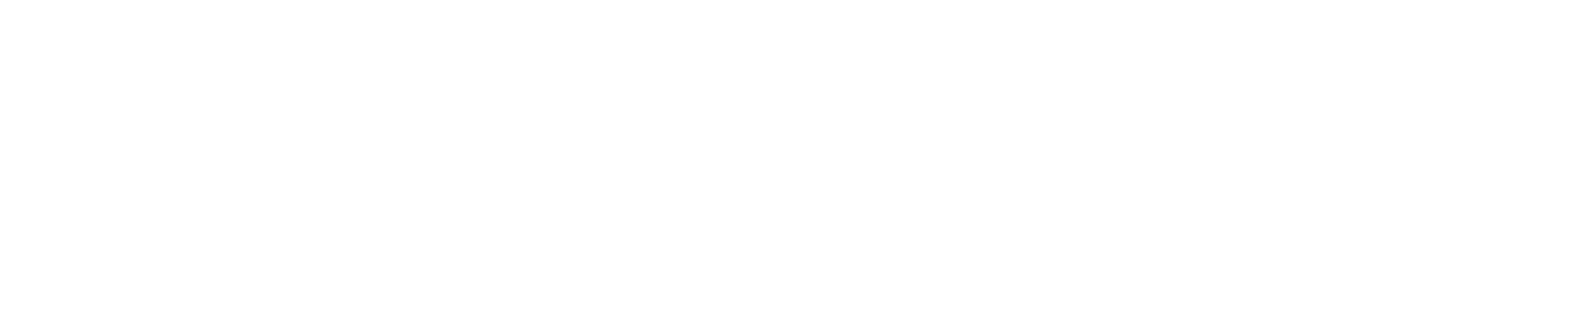 PageGroup Logo groß für dunkle Hintergründe (transparentes PNG)